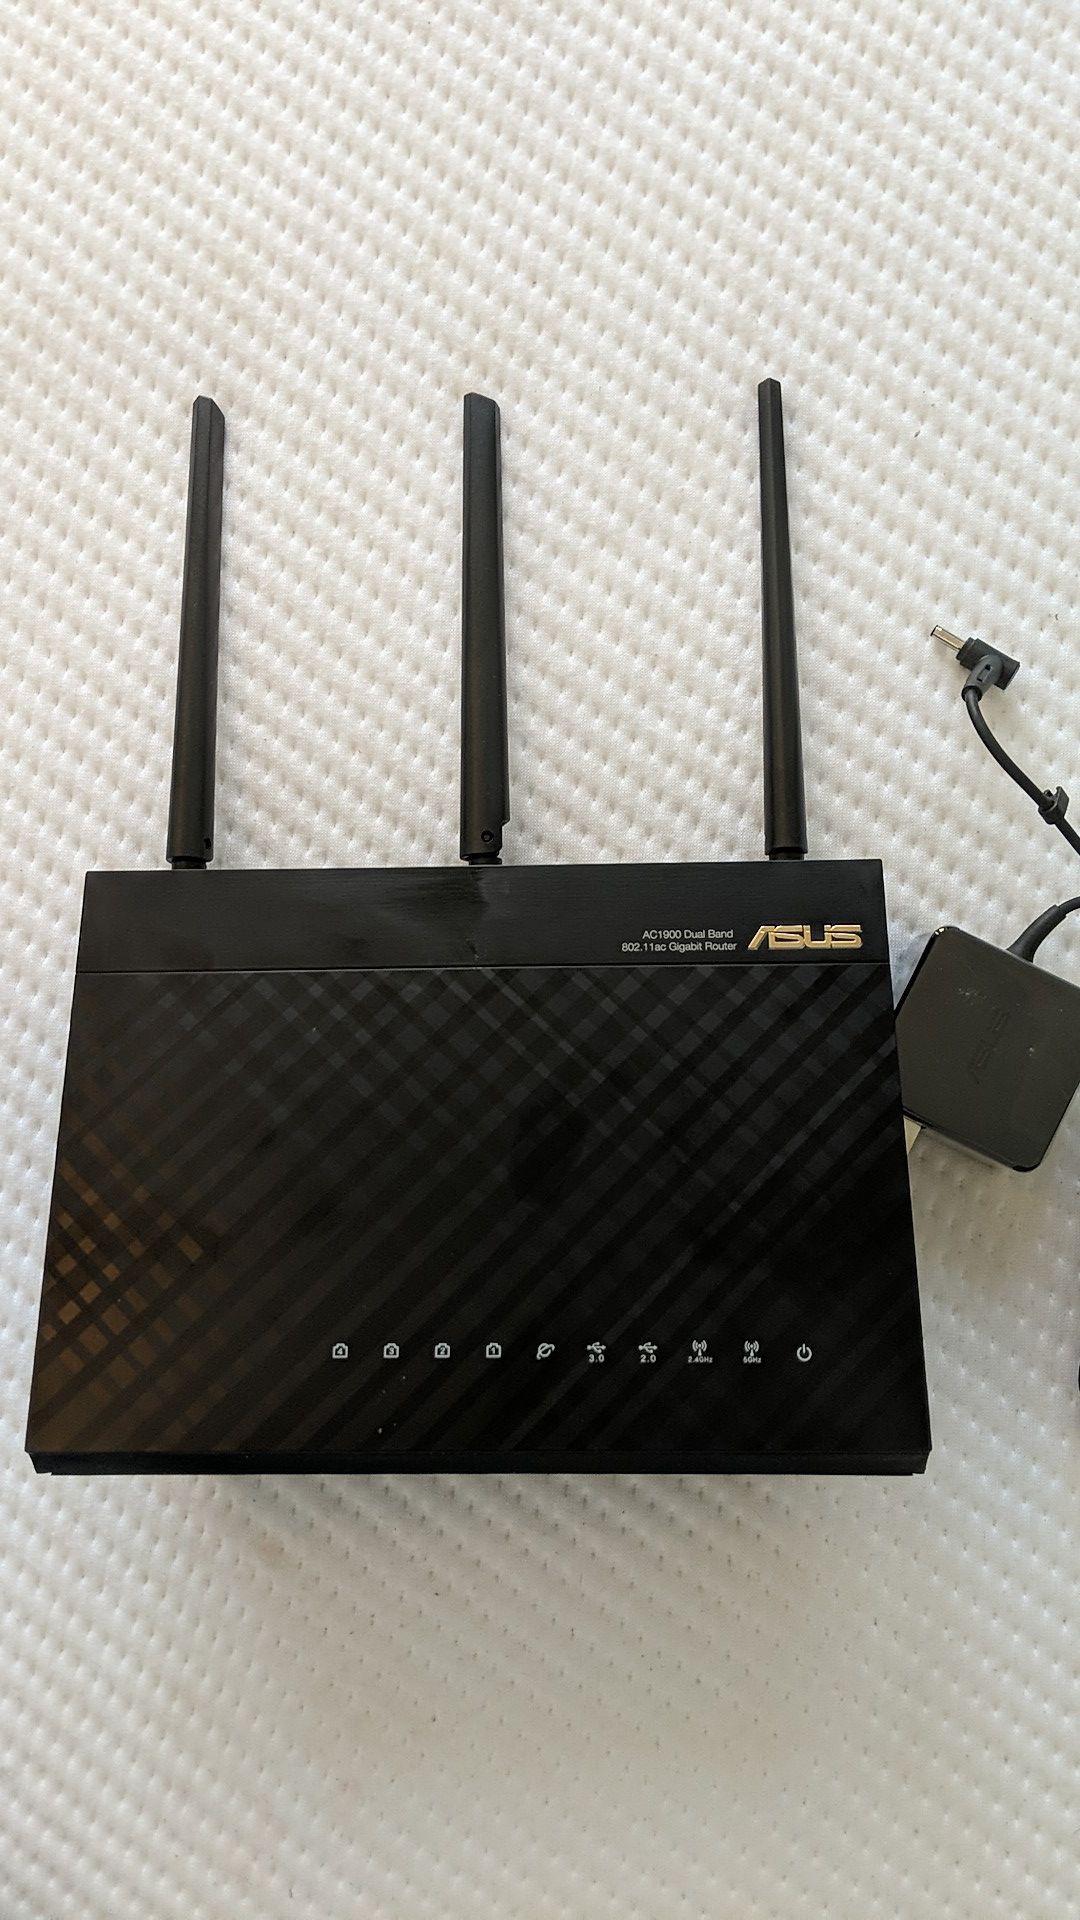 Asus RT-AC68U Dual Band Gigabit Router